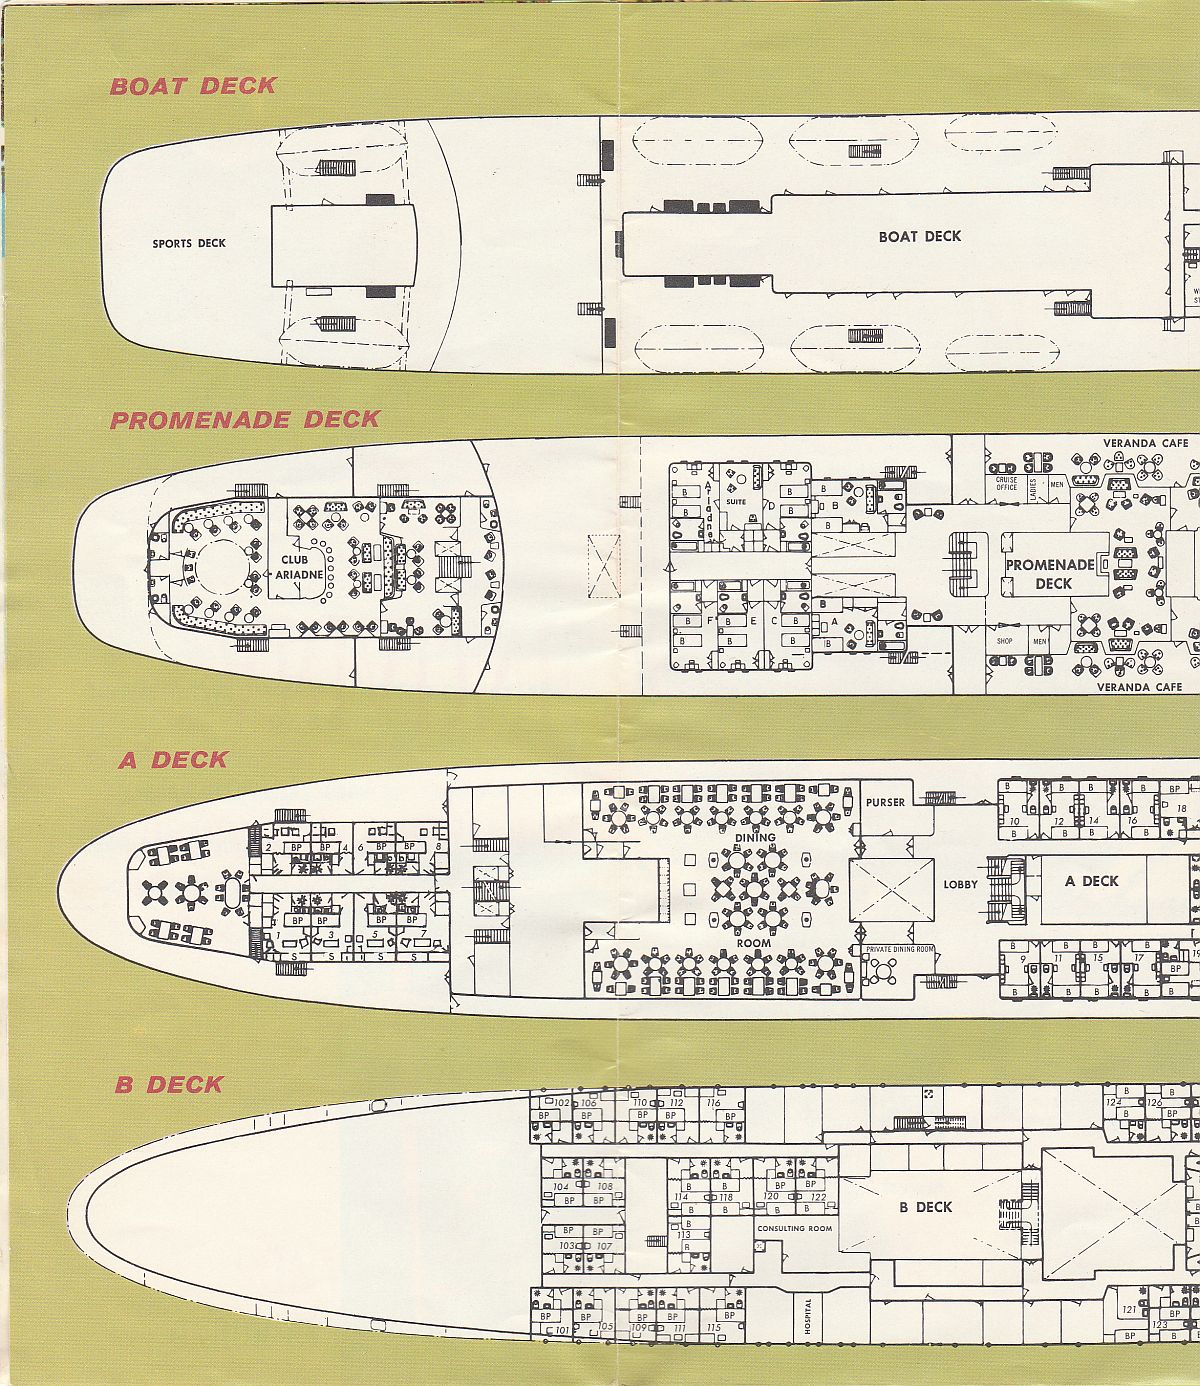 ss Ariadne Deck plan: Deck plans of aft Boat, Promenade, A and B-Decks